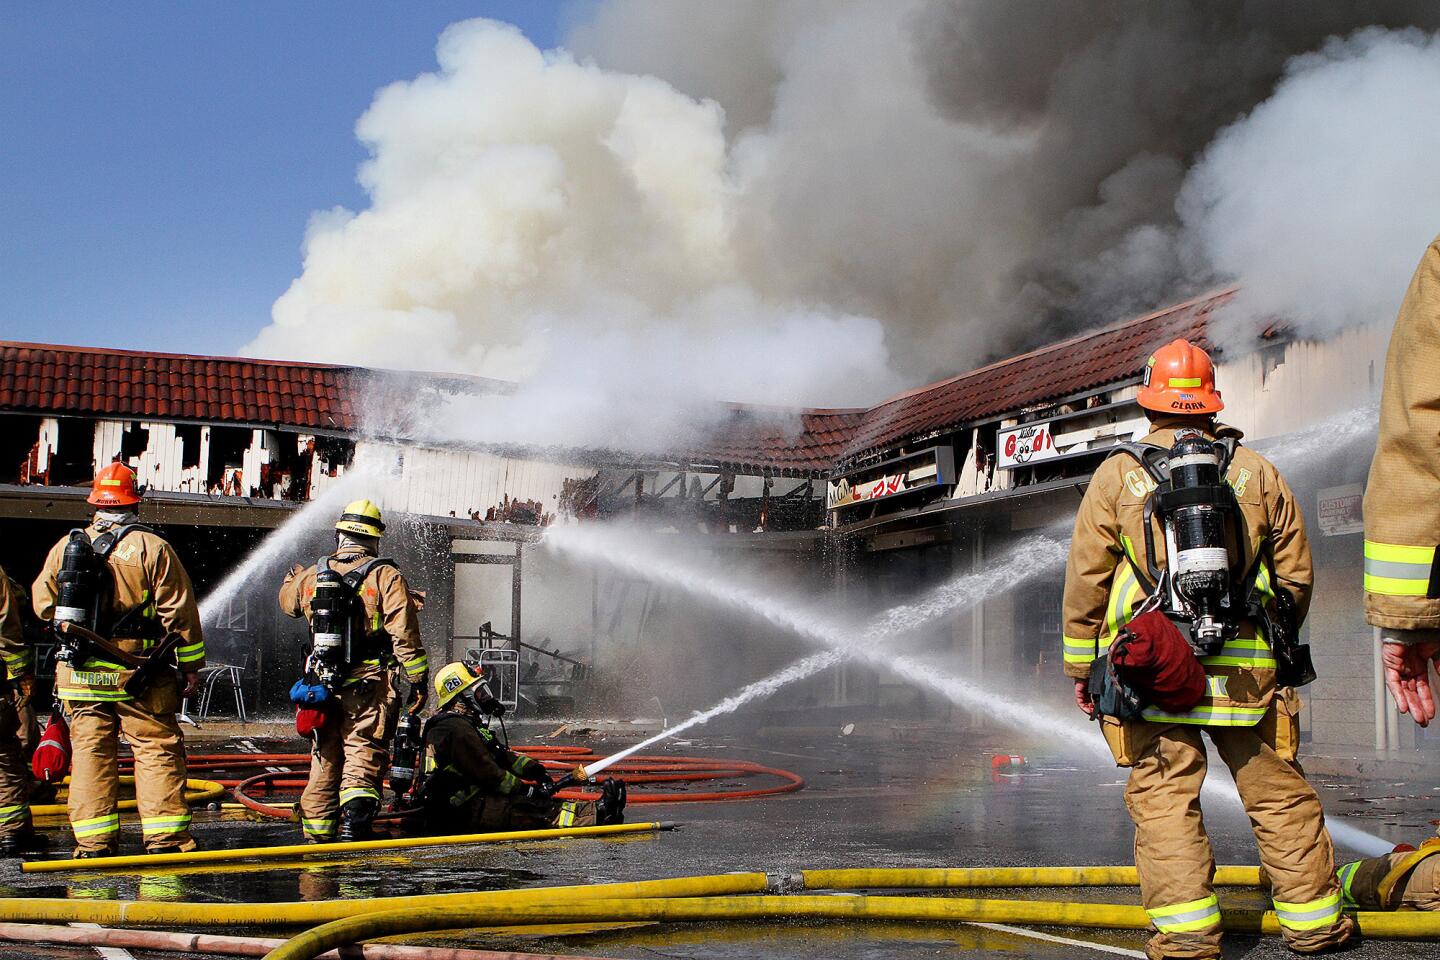 Photo Gallery: Strip mall fire in Glendale